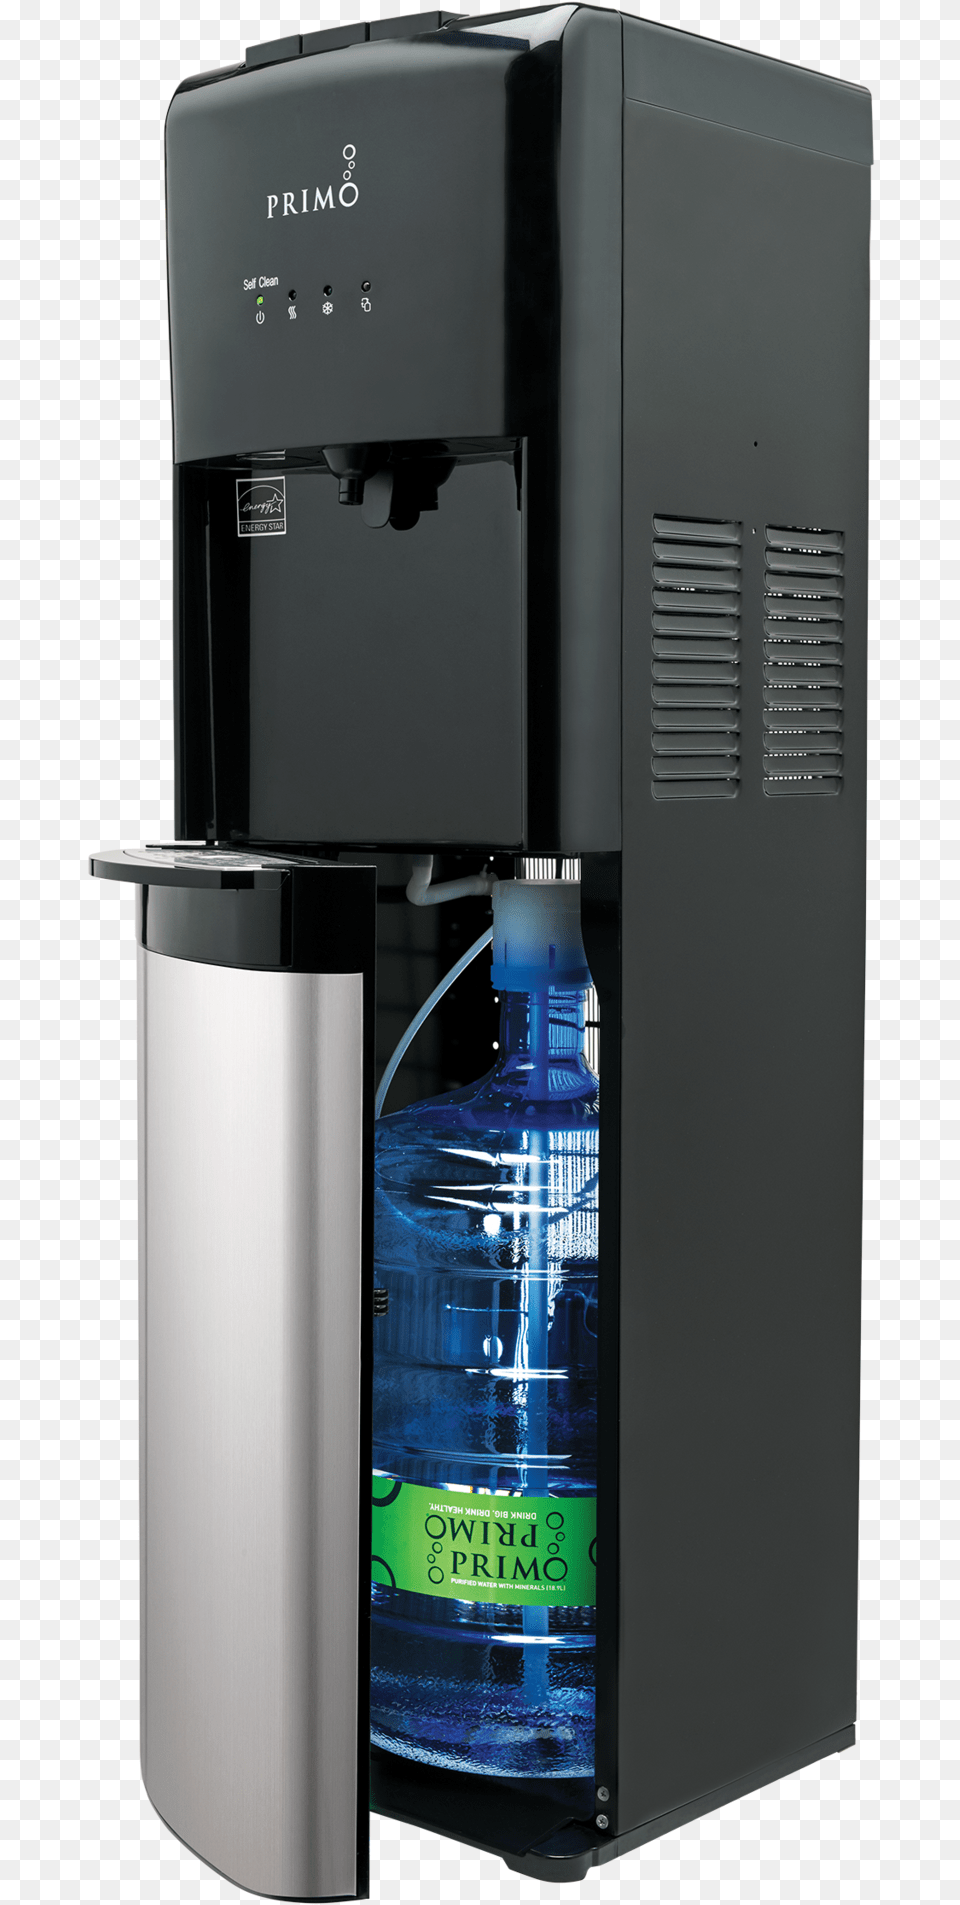 Primo Water Cooler, Computer Hardware, Electronics, Hardware, Appliance Free Transparent Png